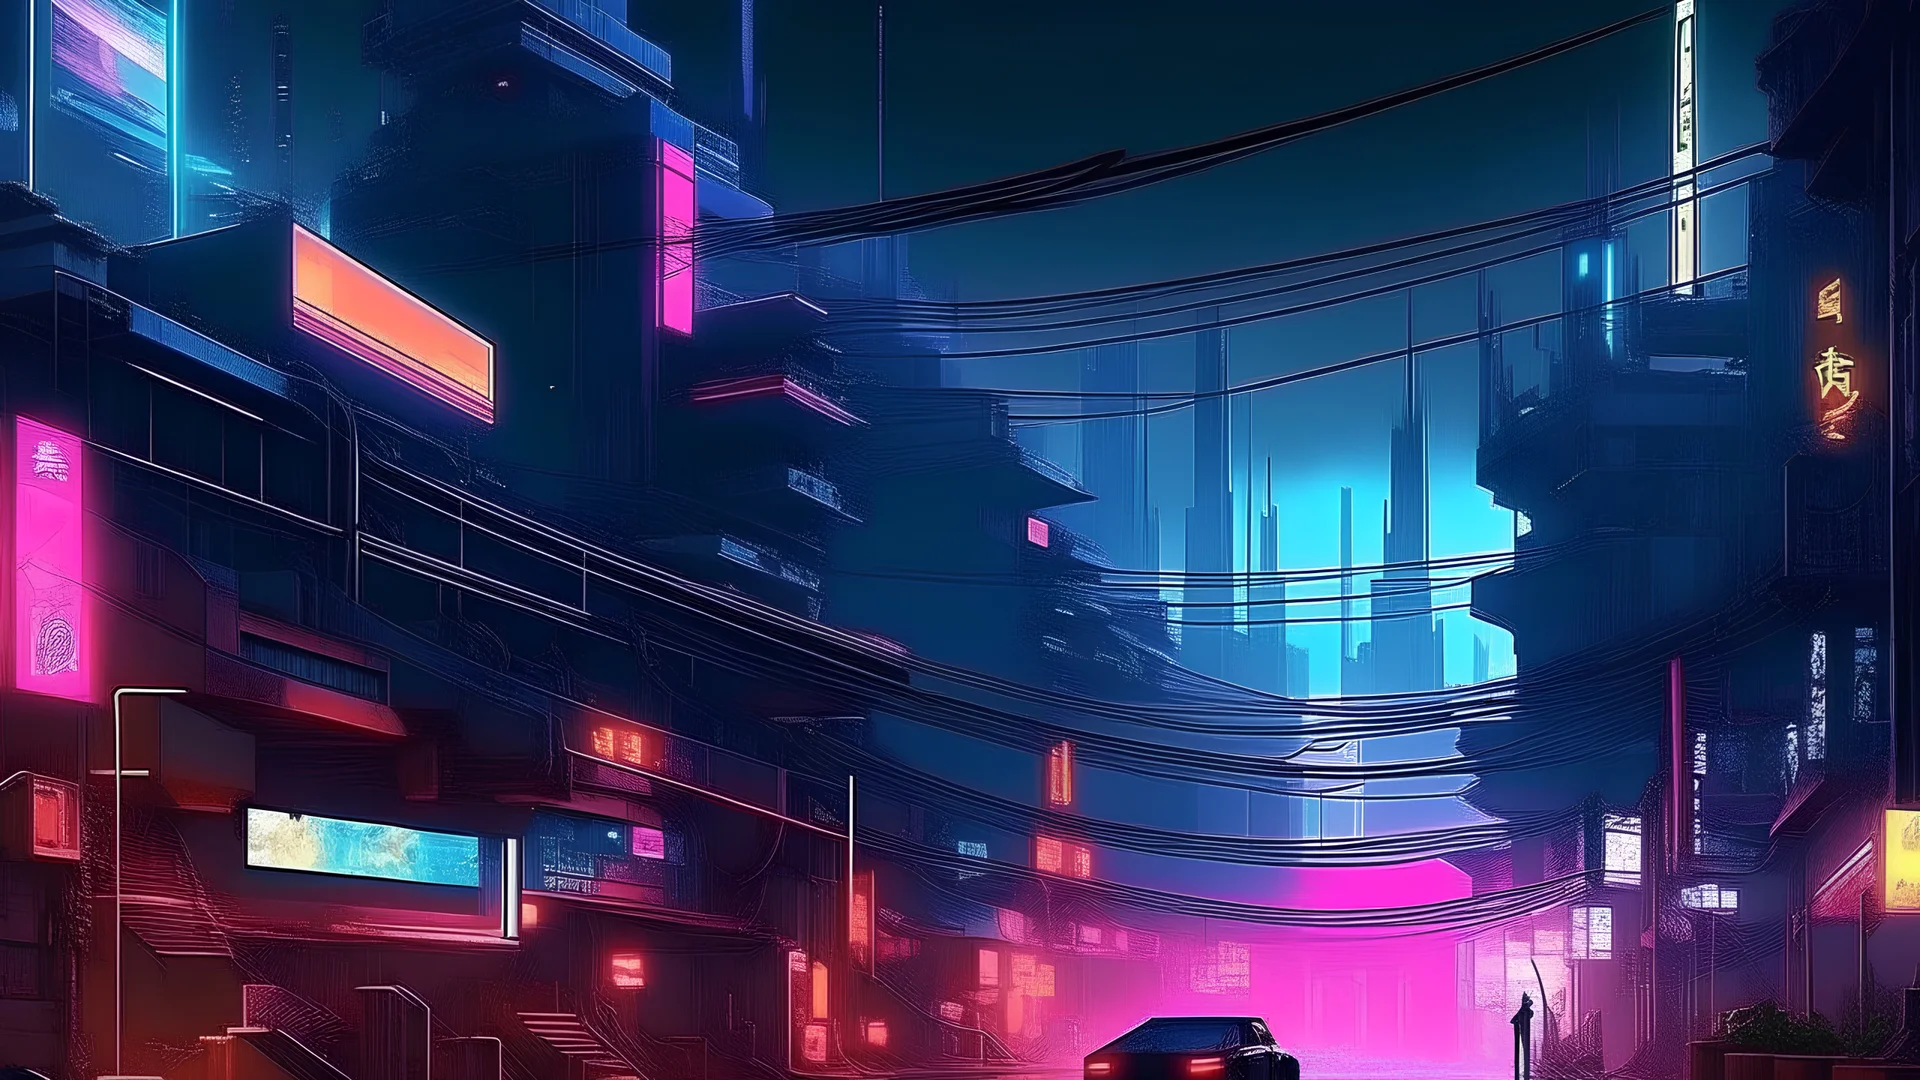 Dystopian cyberpunk city at night with neon lights, fantasy, digital art